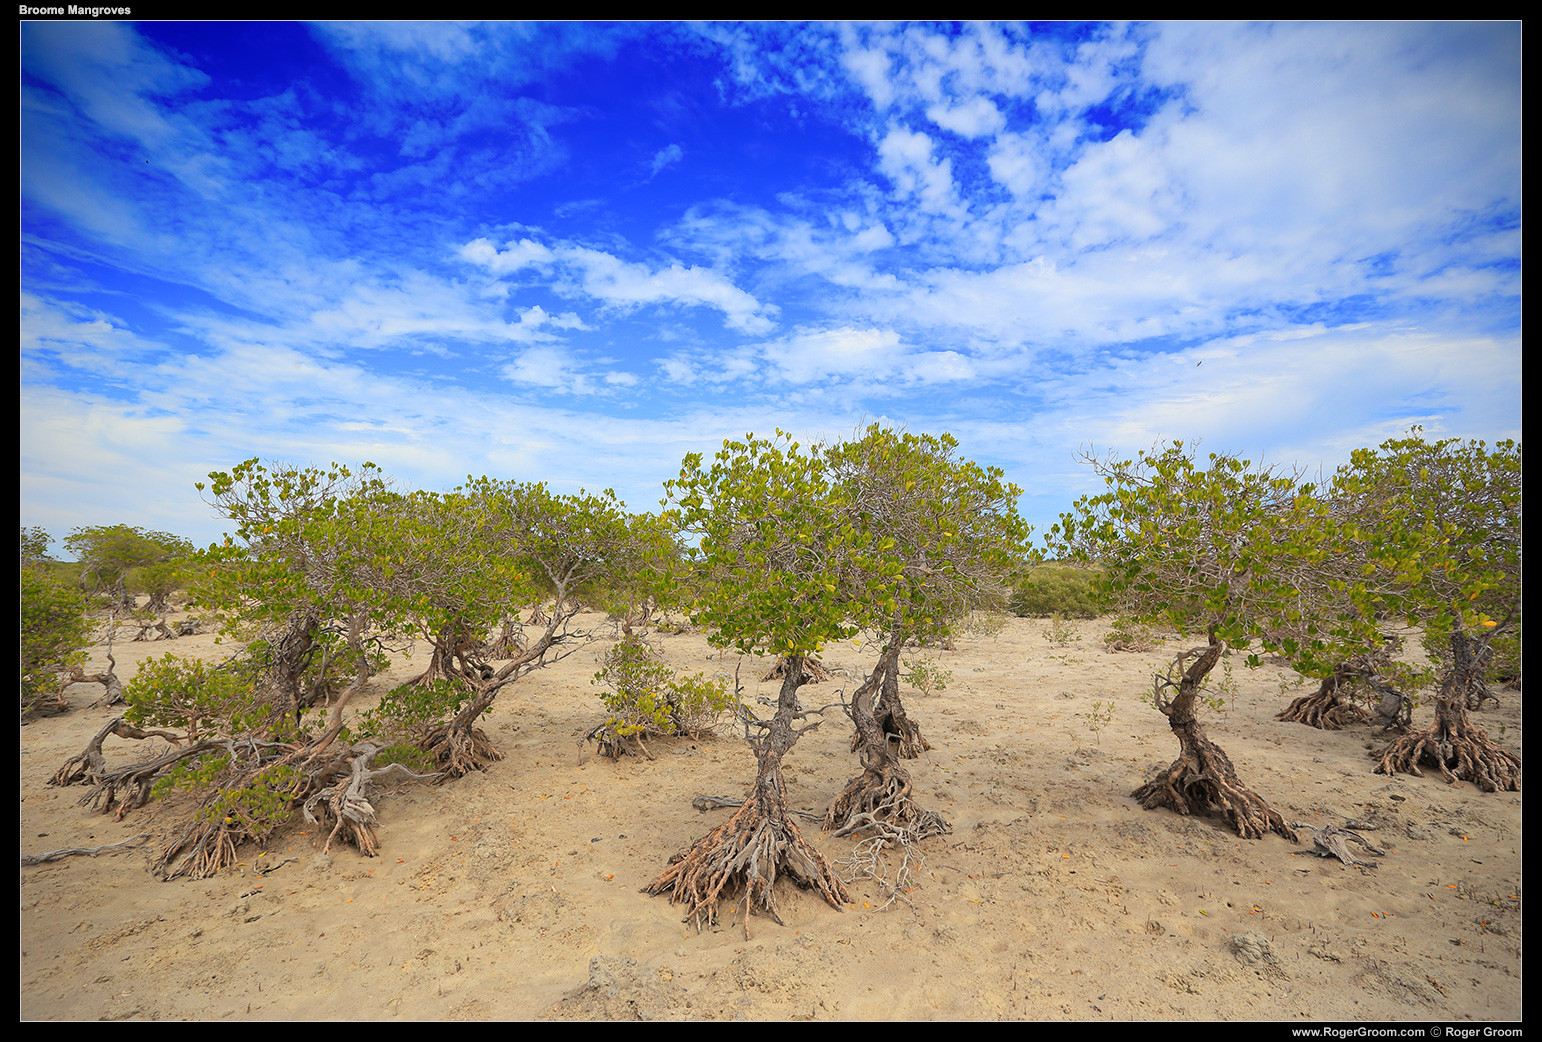 Mangroves at Barred Creek - Broome, Western Australia